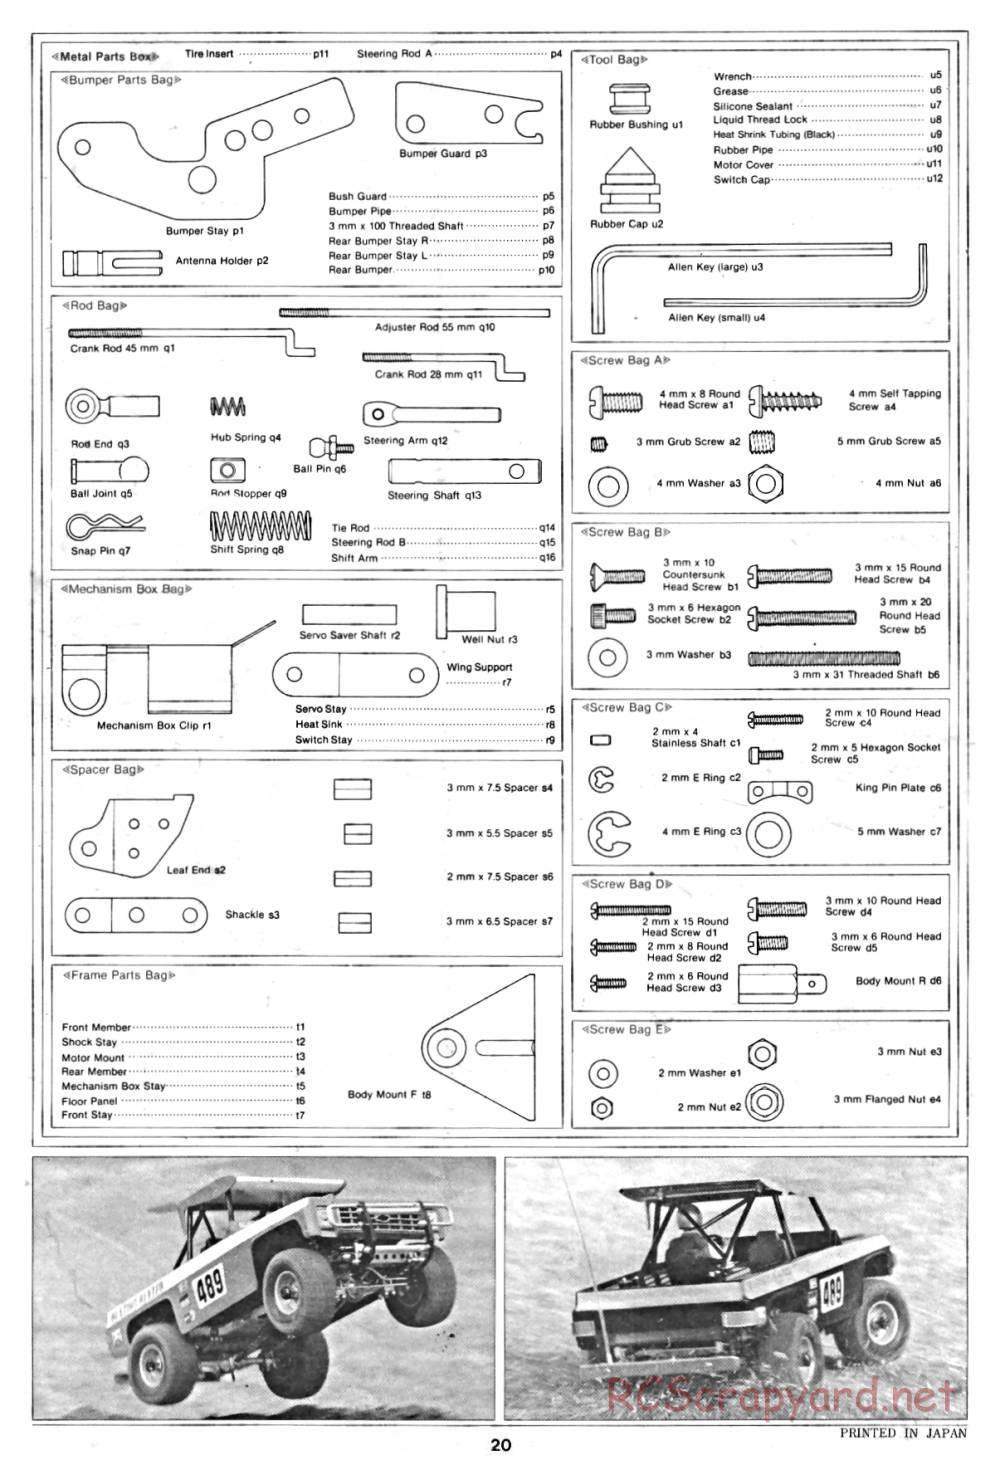 Tamiya - Blazing Blazer - 58029 - Manual - Page 20